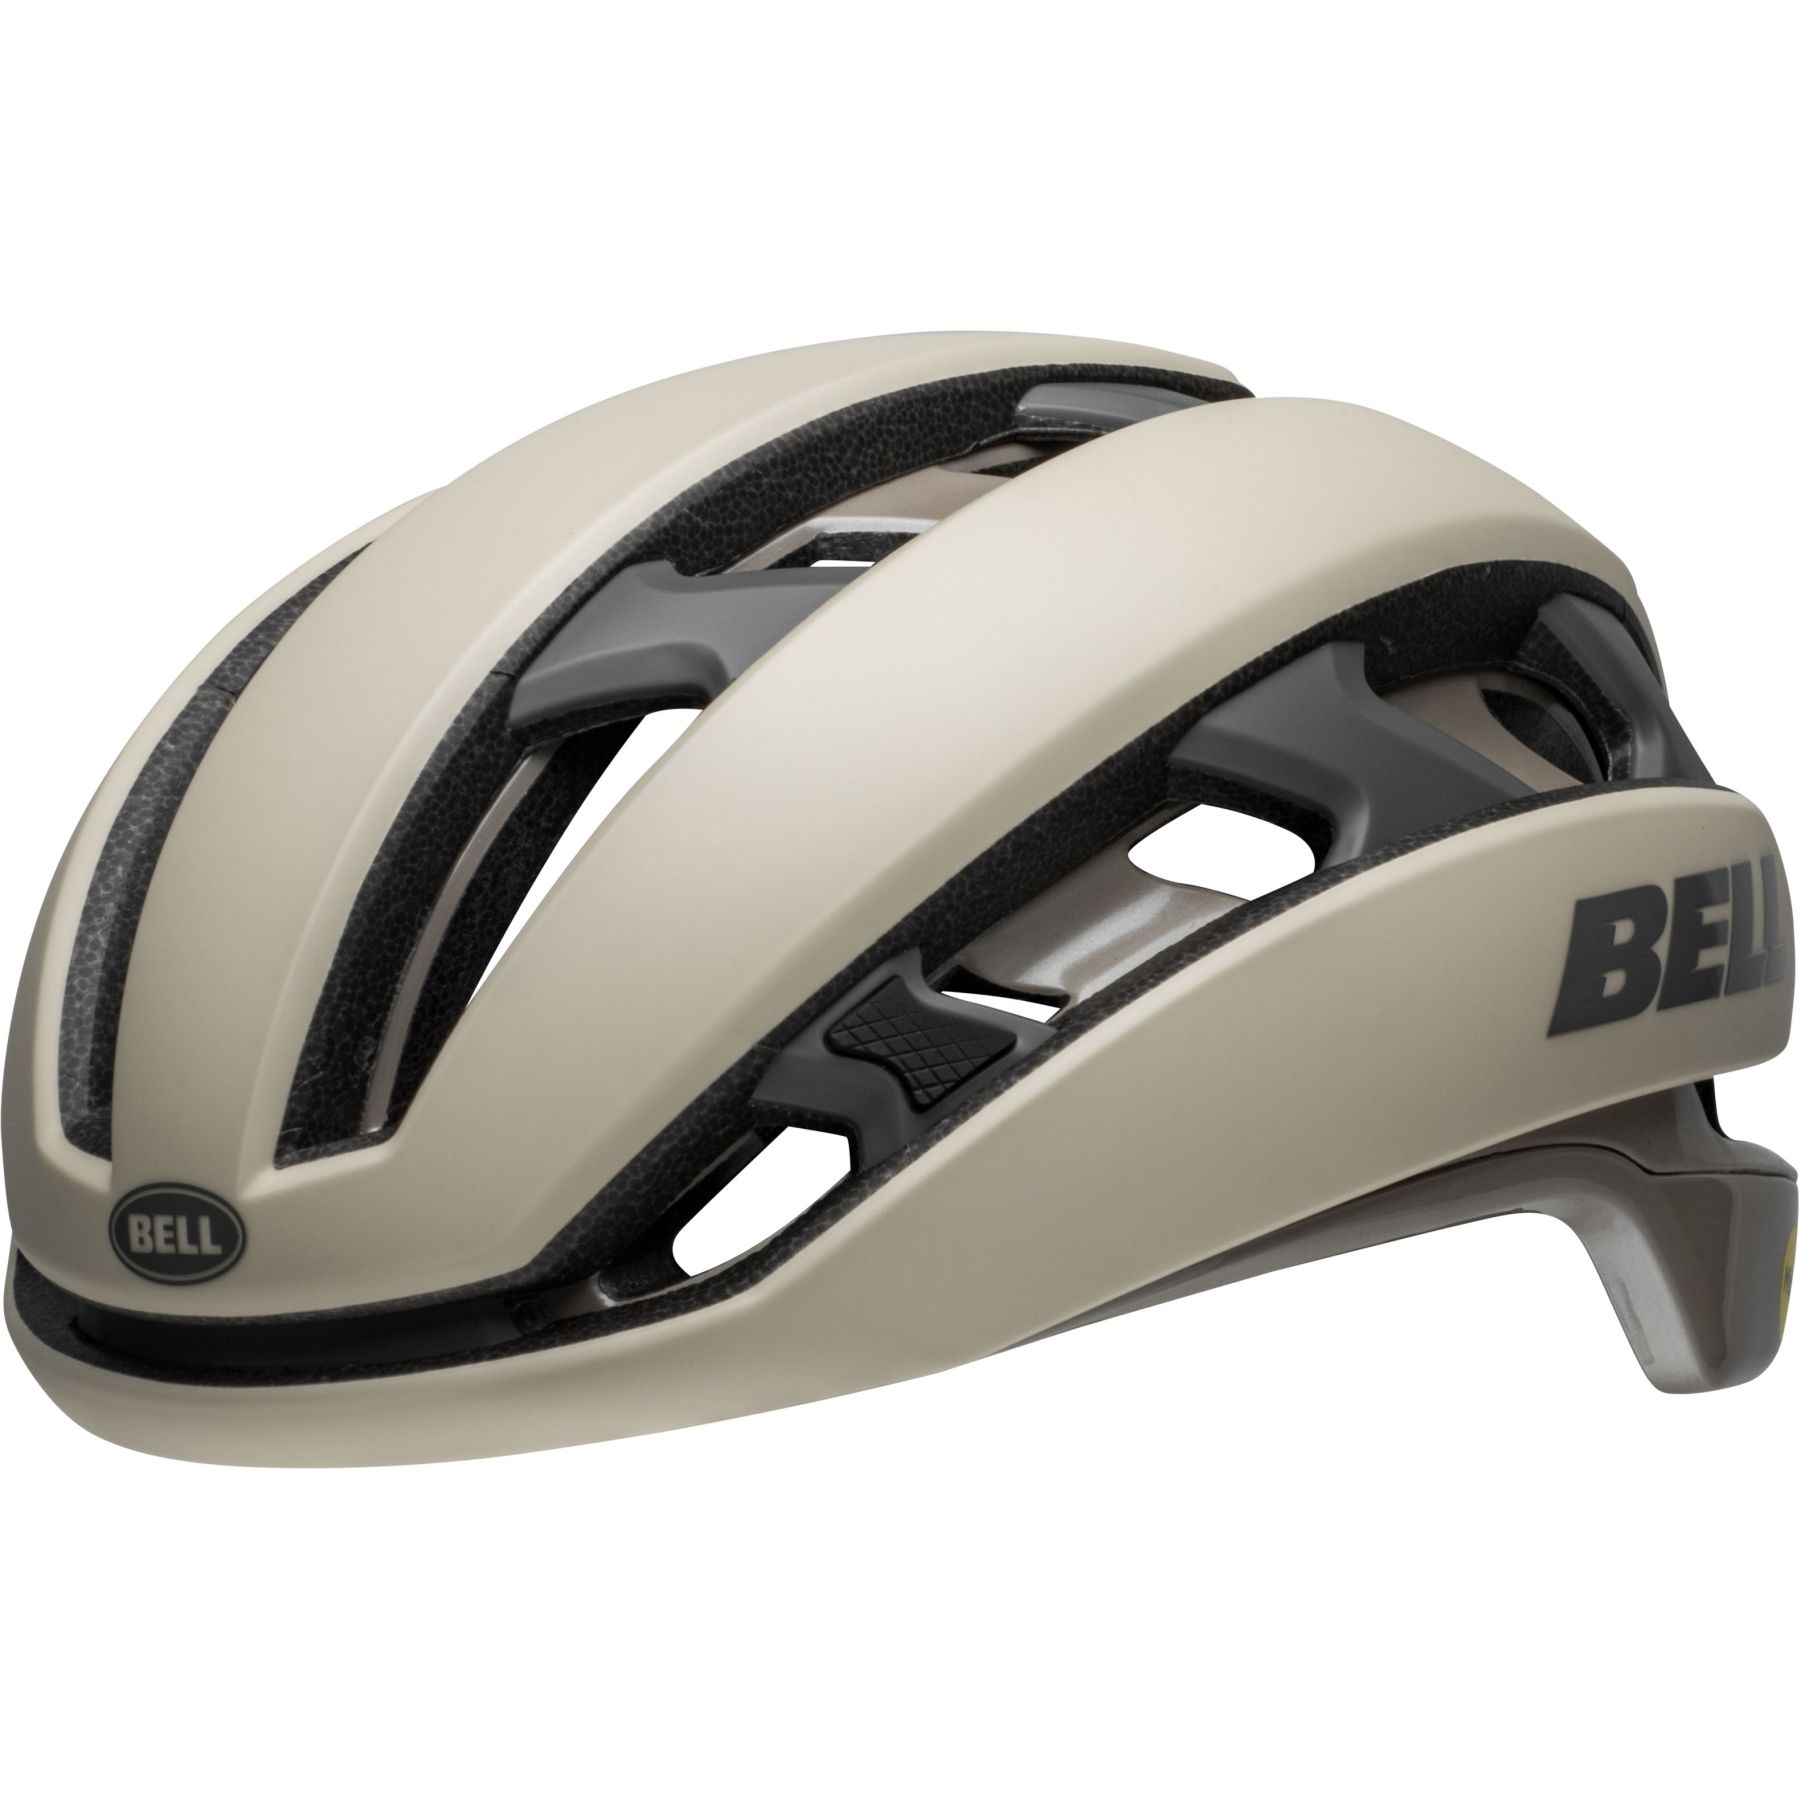 Productfoto van Bell XR Spherical Helm - matte/gloss cement